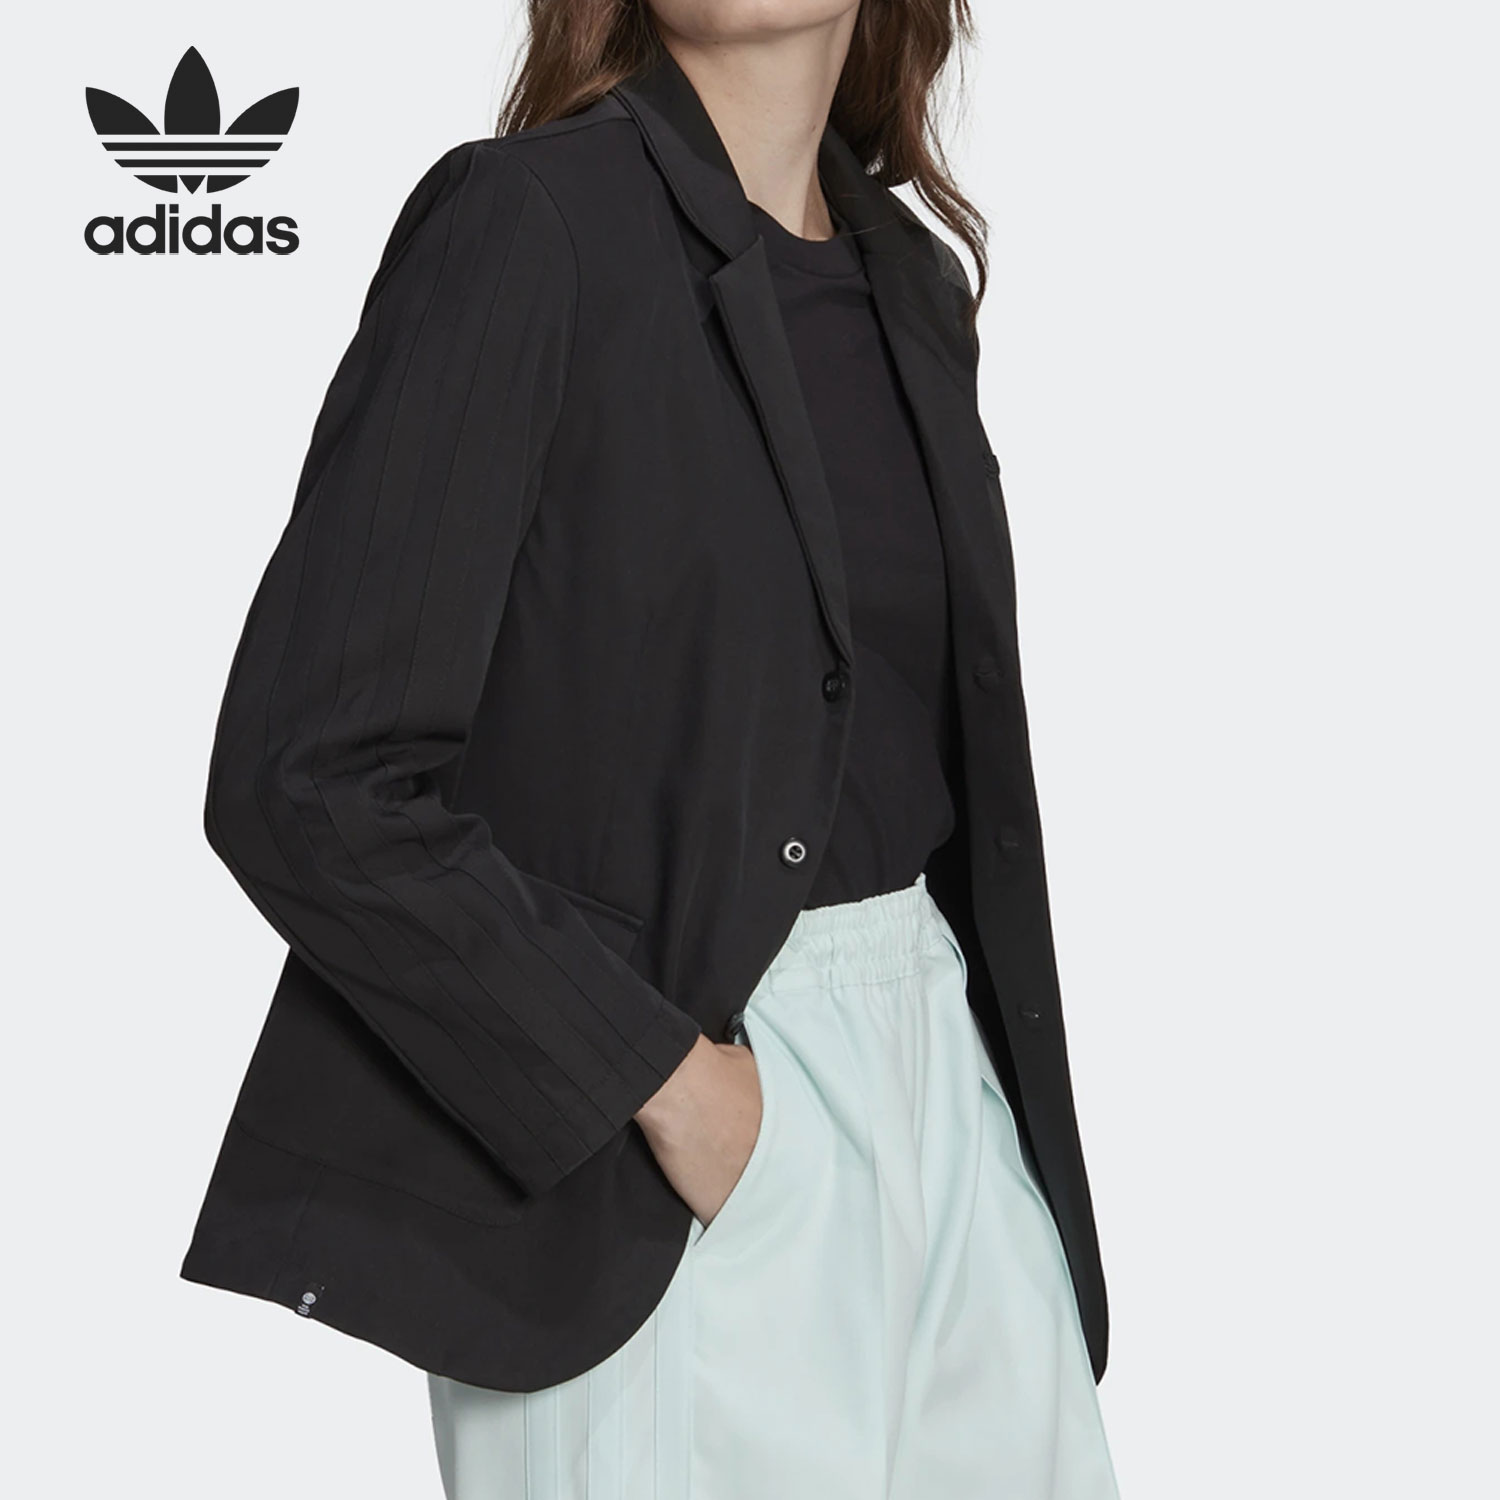 Adidas Womens Suit Black HN3670 Outwear